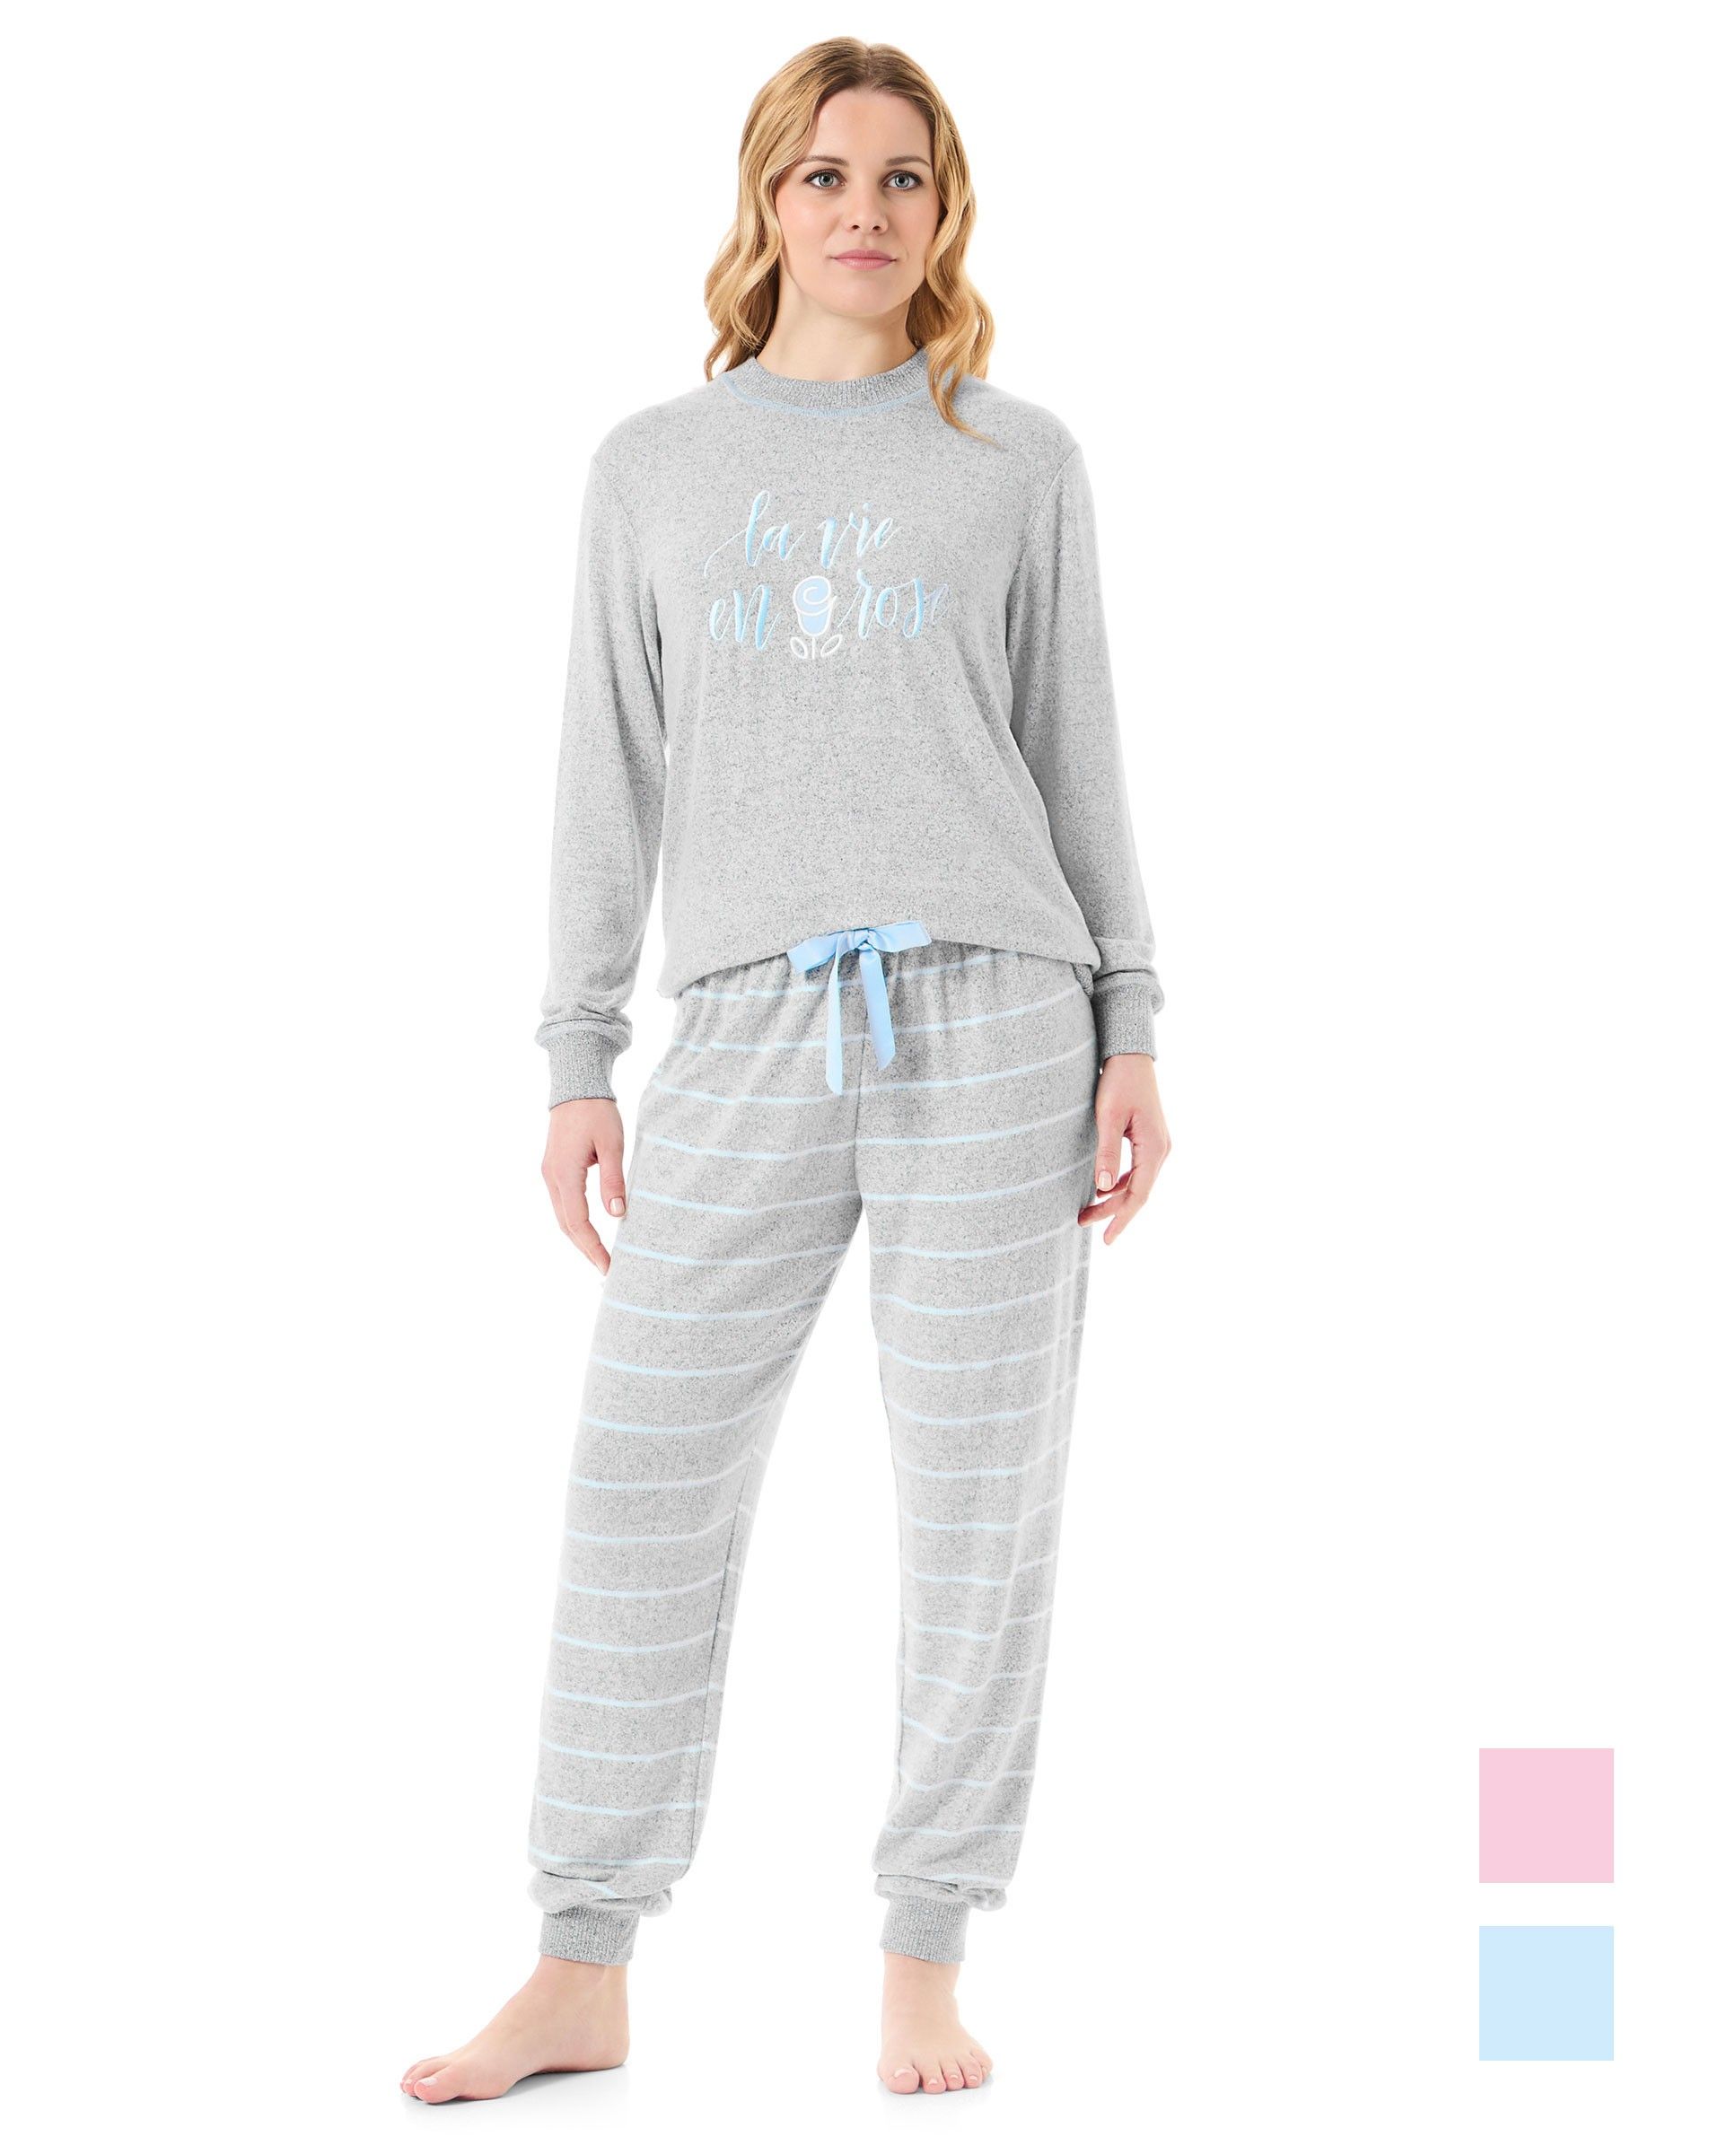 Pijama largo de mujer manga larga puños y cuello redondo con pantalón largo rayas